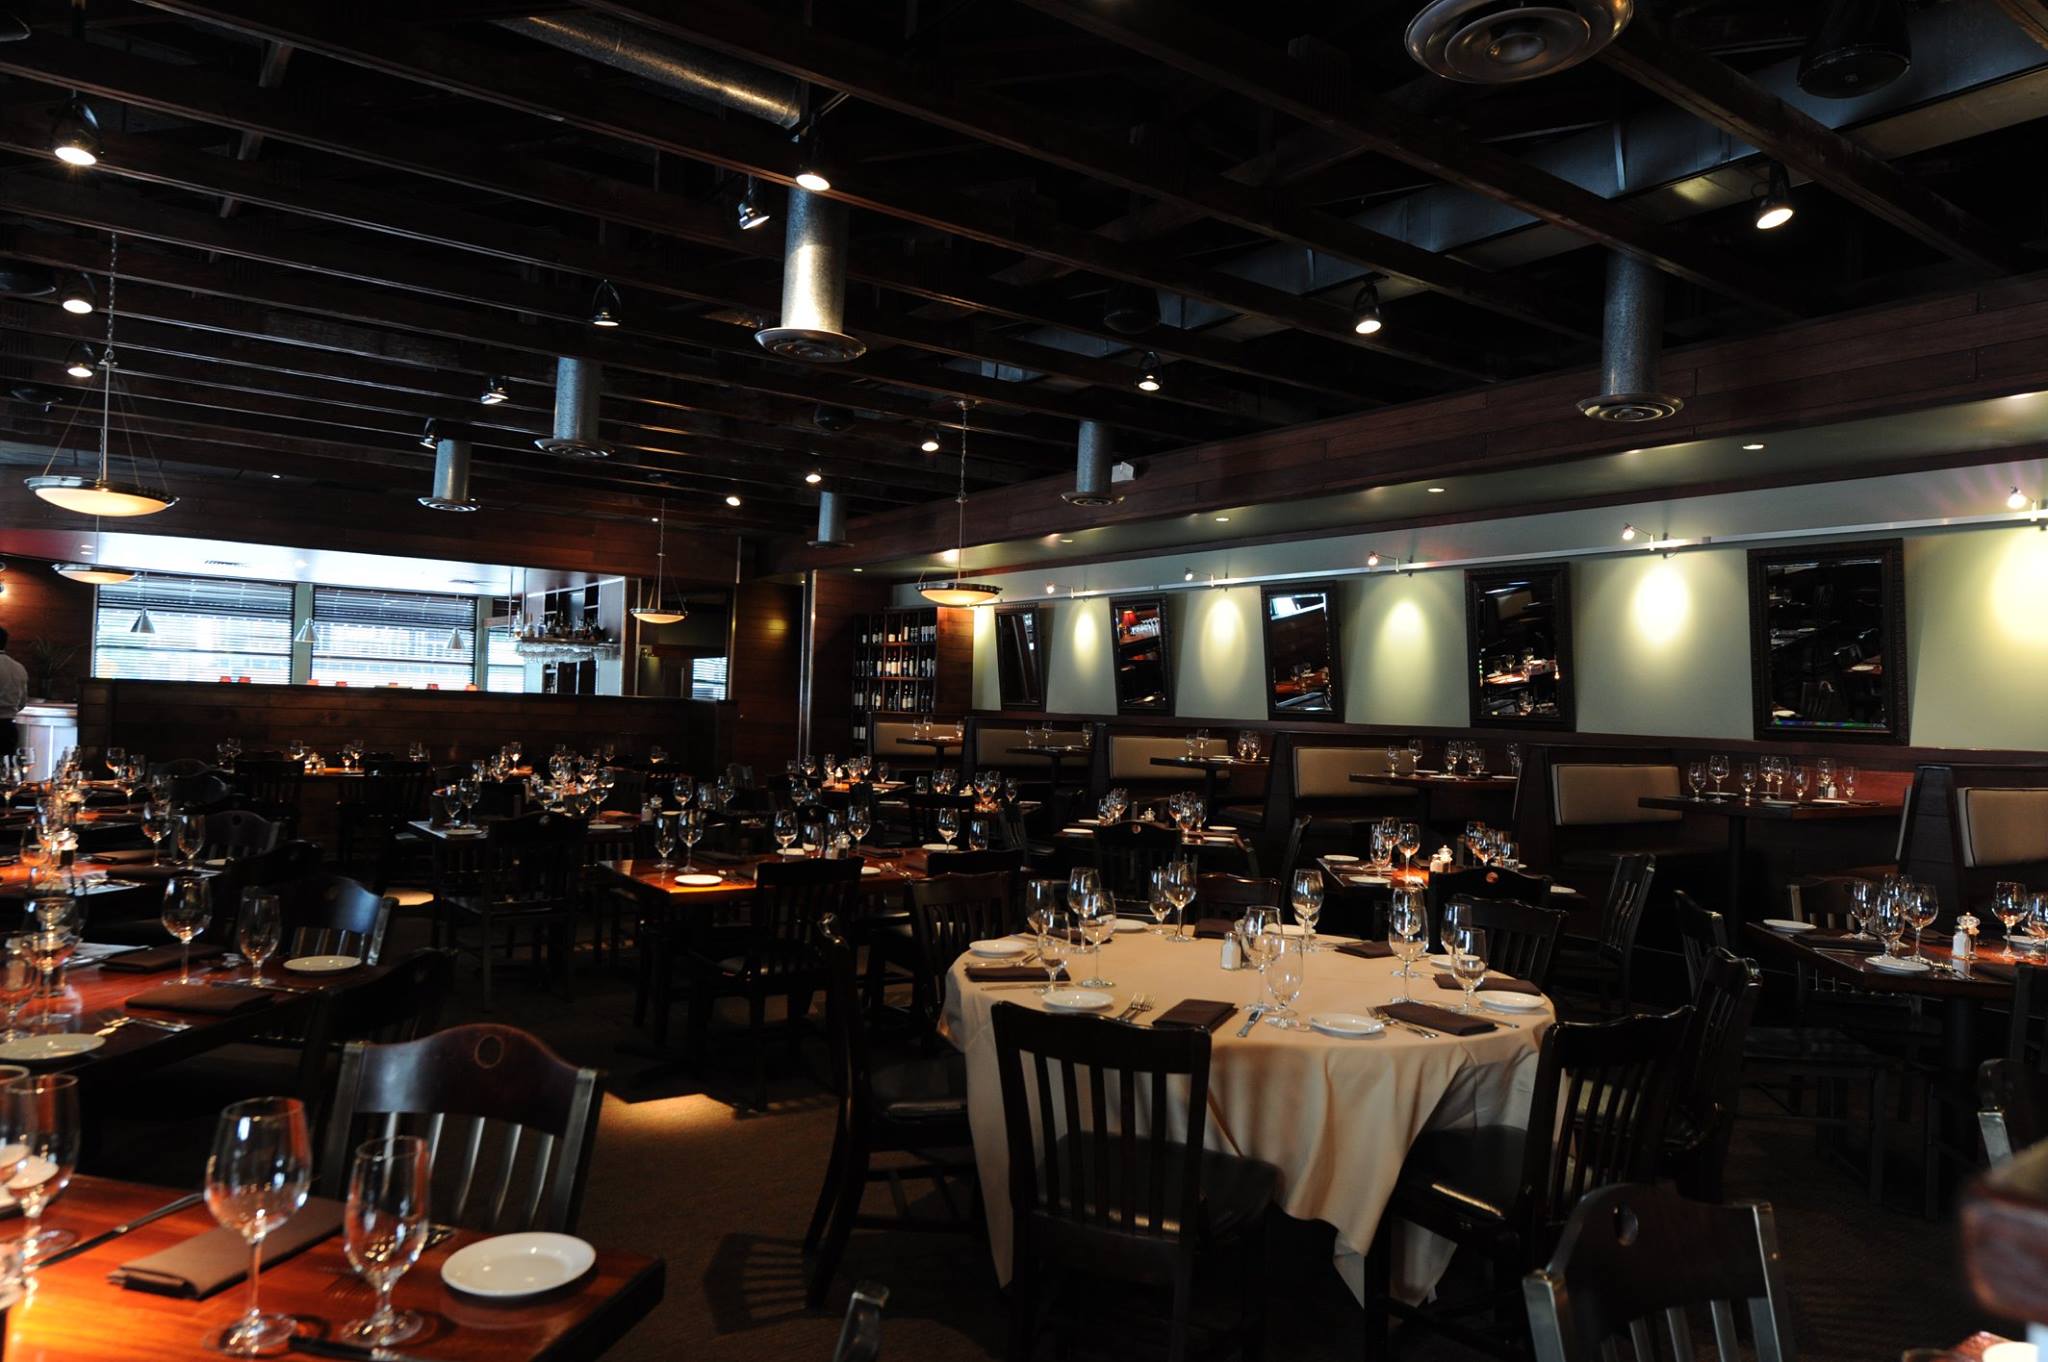 The dining room of Houston restaurant Frank’s Americana Revival.